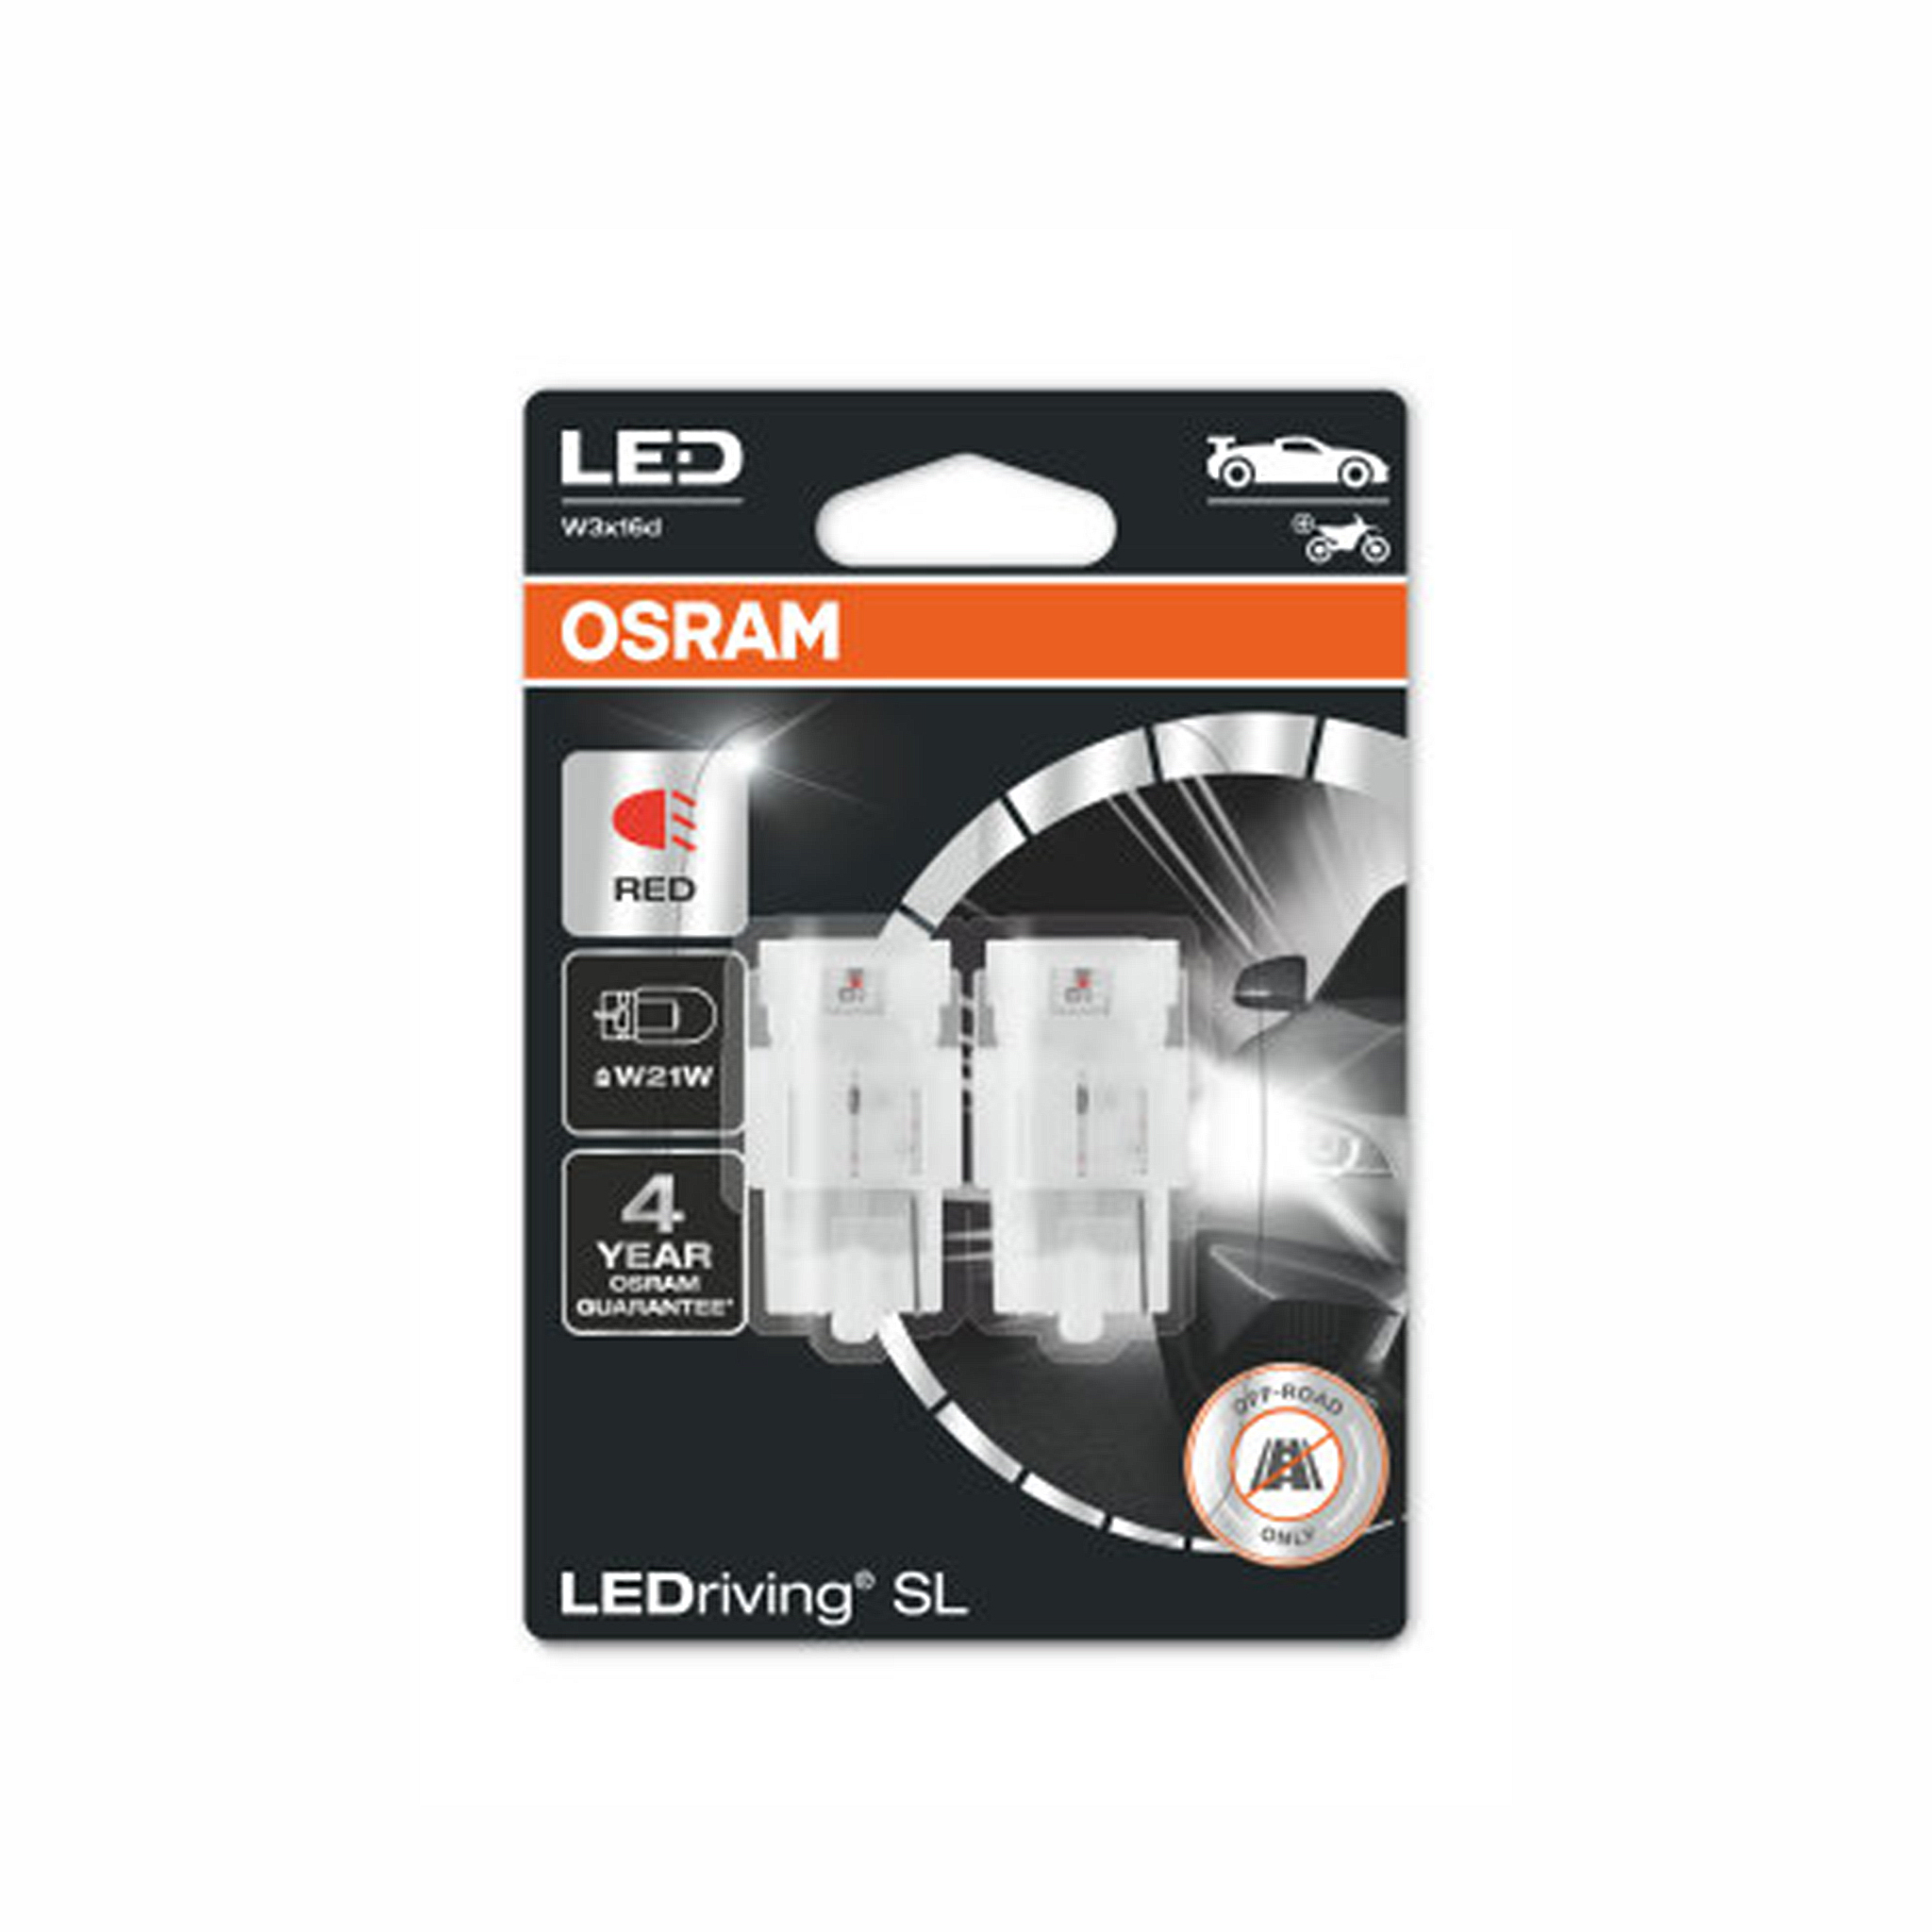 LED-pærer Osram LedDriving SL, 6000K, T20 (W21W)